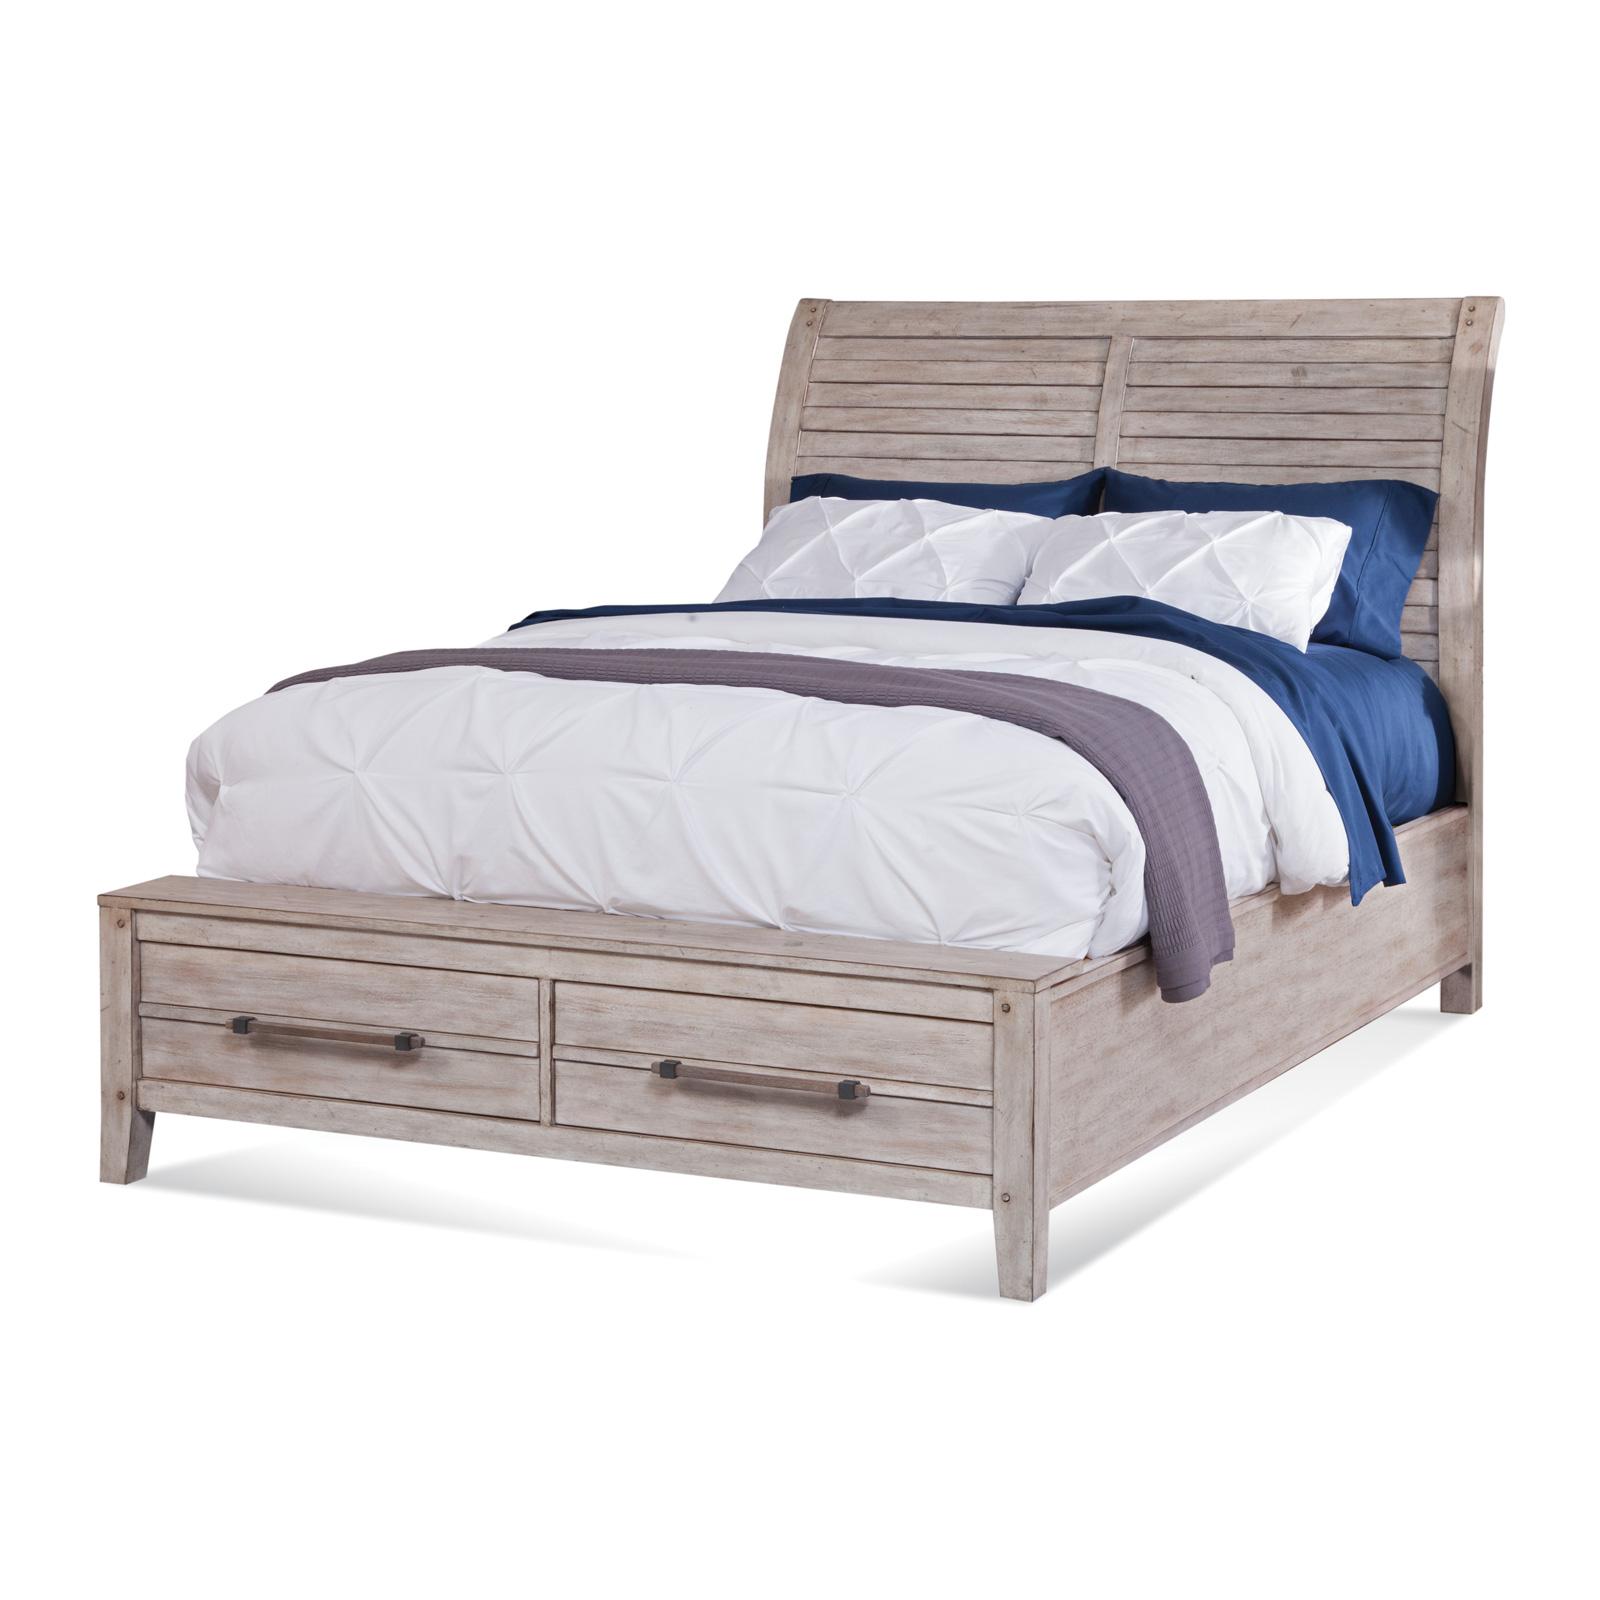 Classic, Traditional Sleigh Bed AURORA 2810-50PSB 2810-50SLST in whitewash 